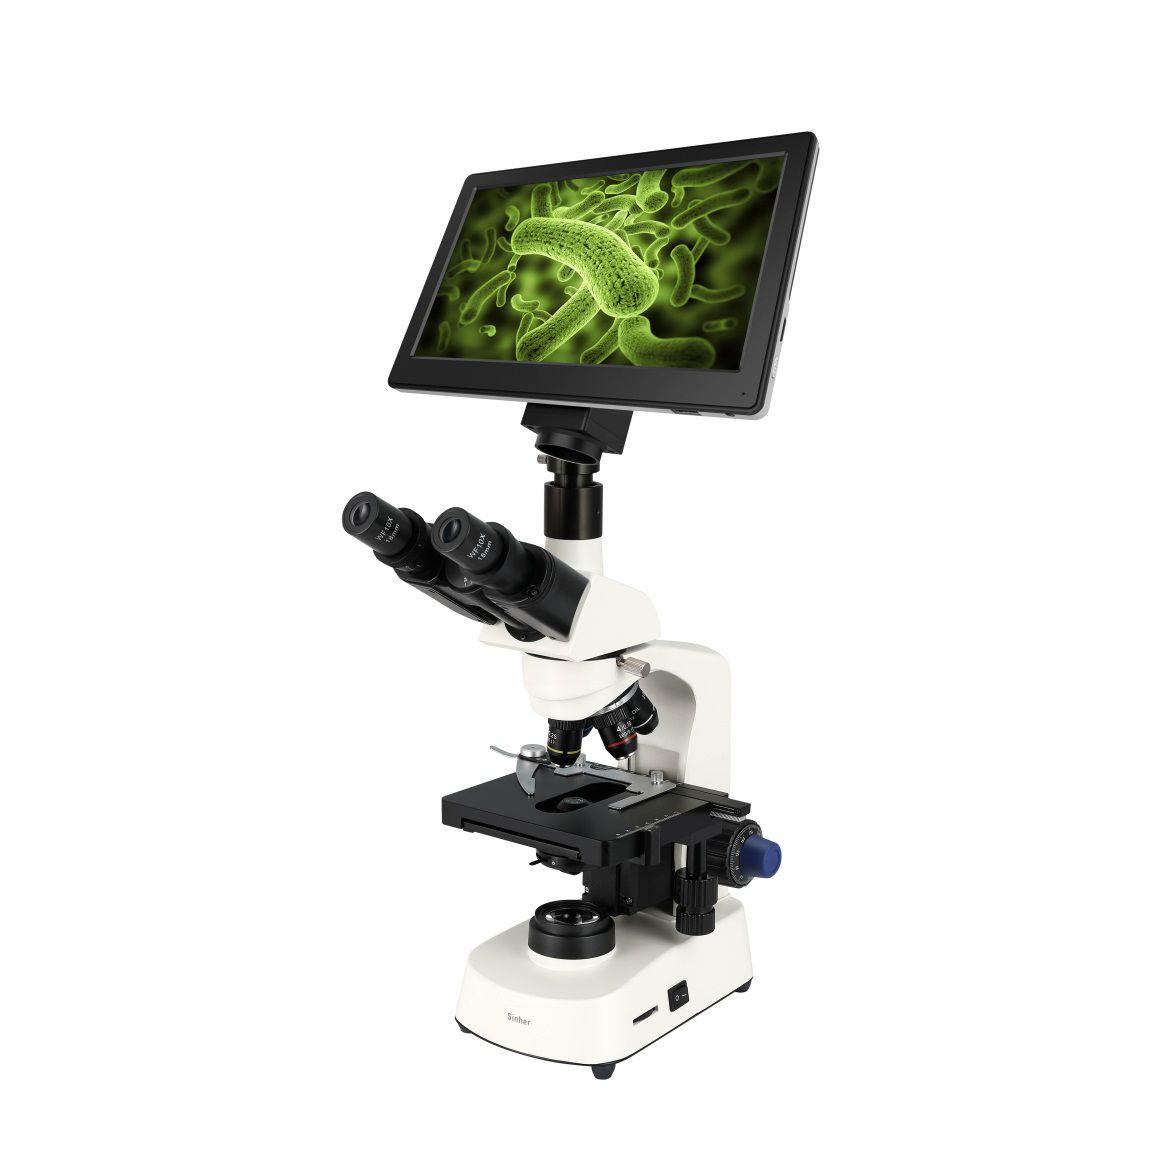 Microscope with screen